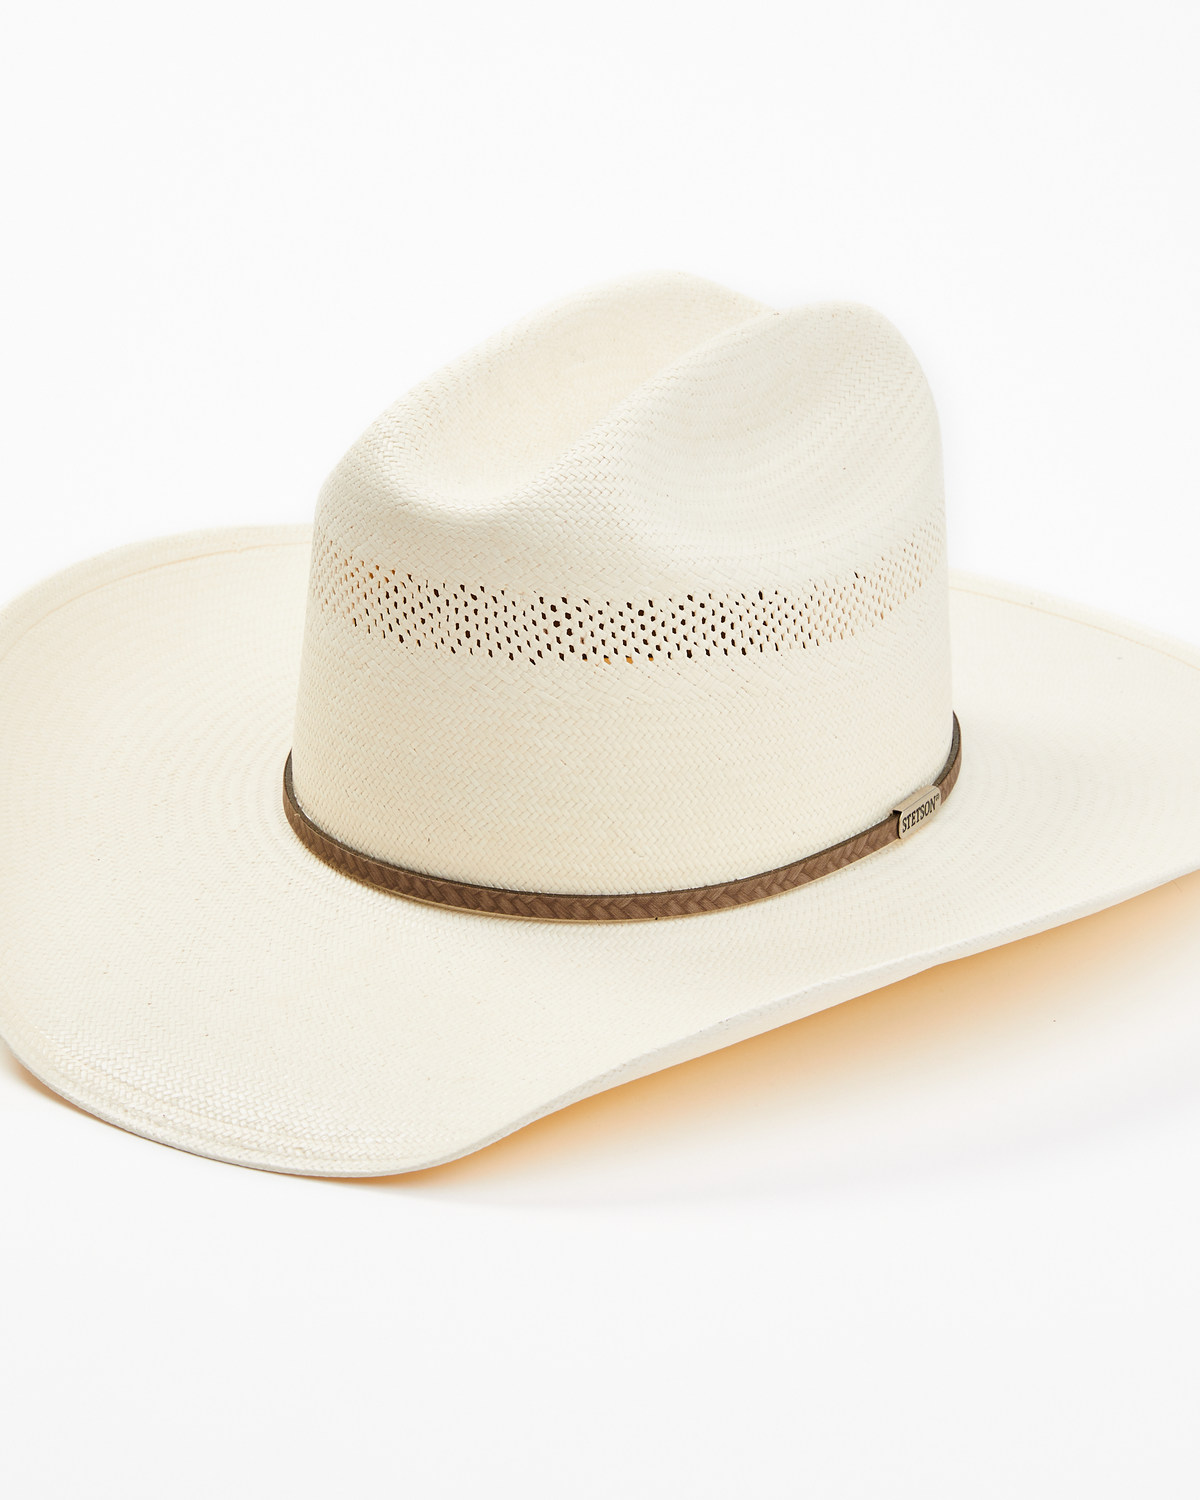 Stetson Plait 10X Straw Cowboy Hat